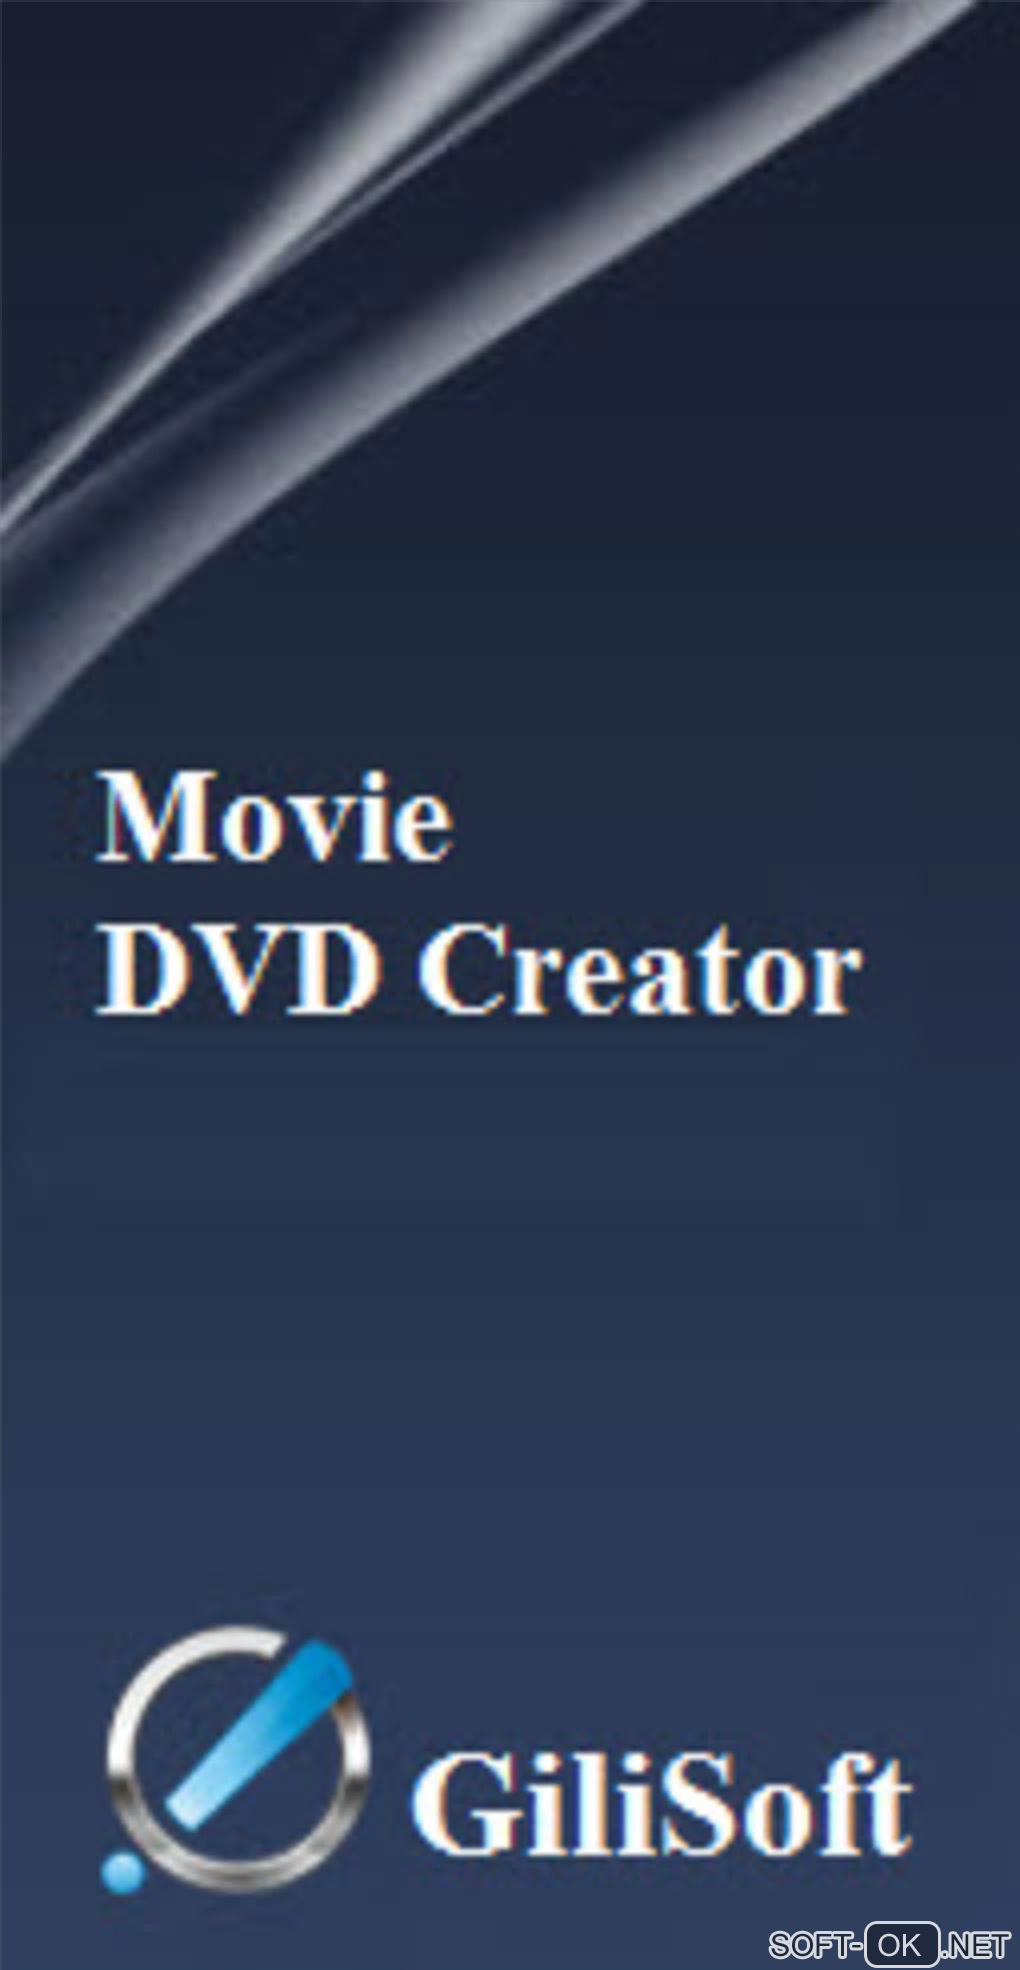 The appearance "GiliSoft Movie DVD Creator"